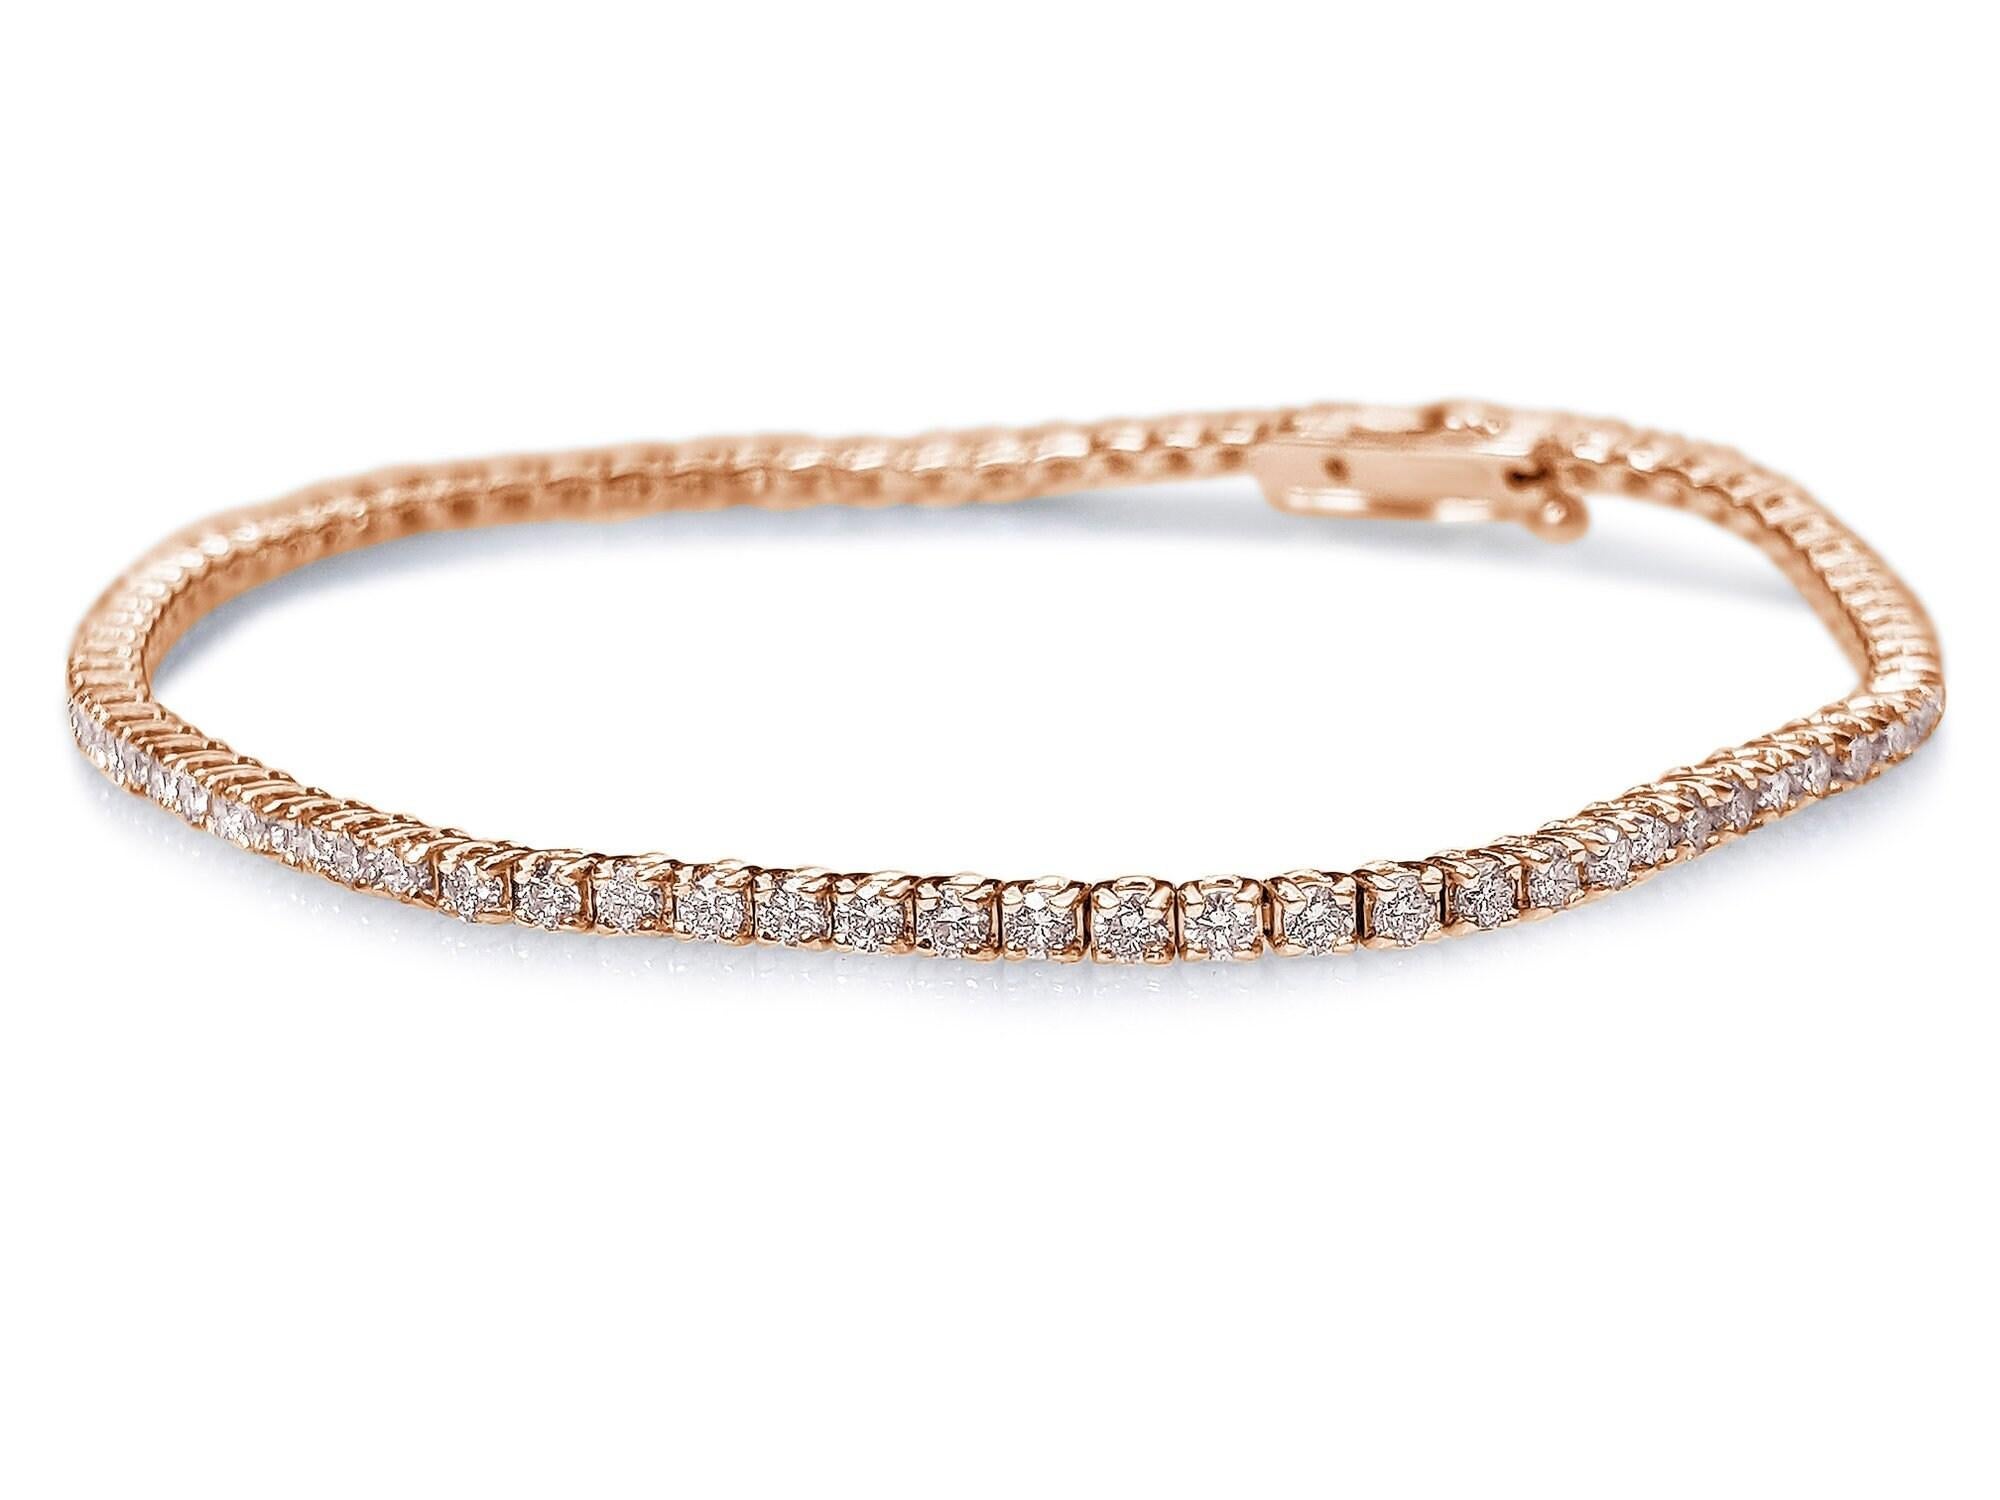 14k rose gold vs mix pink diamond tennis bracelet
Certificate # J3210491121

Gemstone: Natural Diamond
Shape: Round Brilliant
Carat weight: 1.10 Ct (105 stones)
Color Grade: Mix Pink
Clarity: VS2-I2

Total weight: 4.91 grams

Length - 7 Inch / 18 cm.